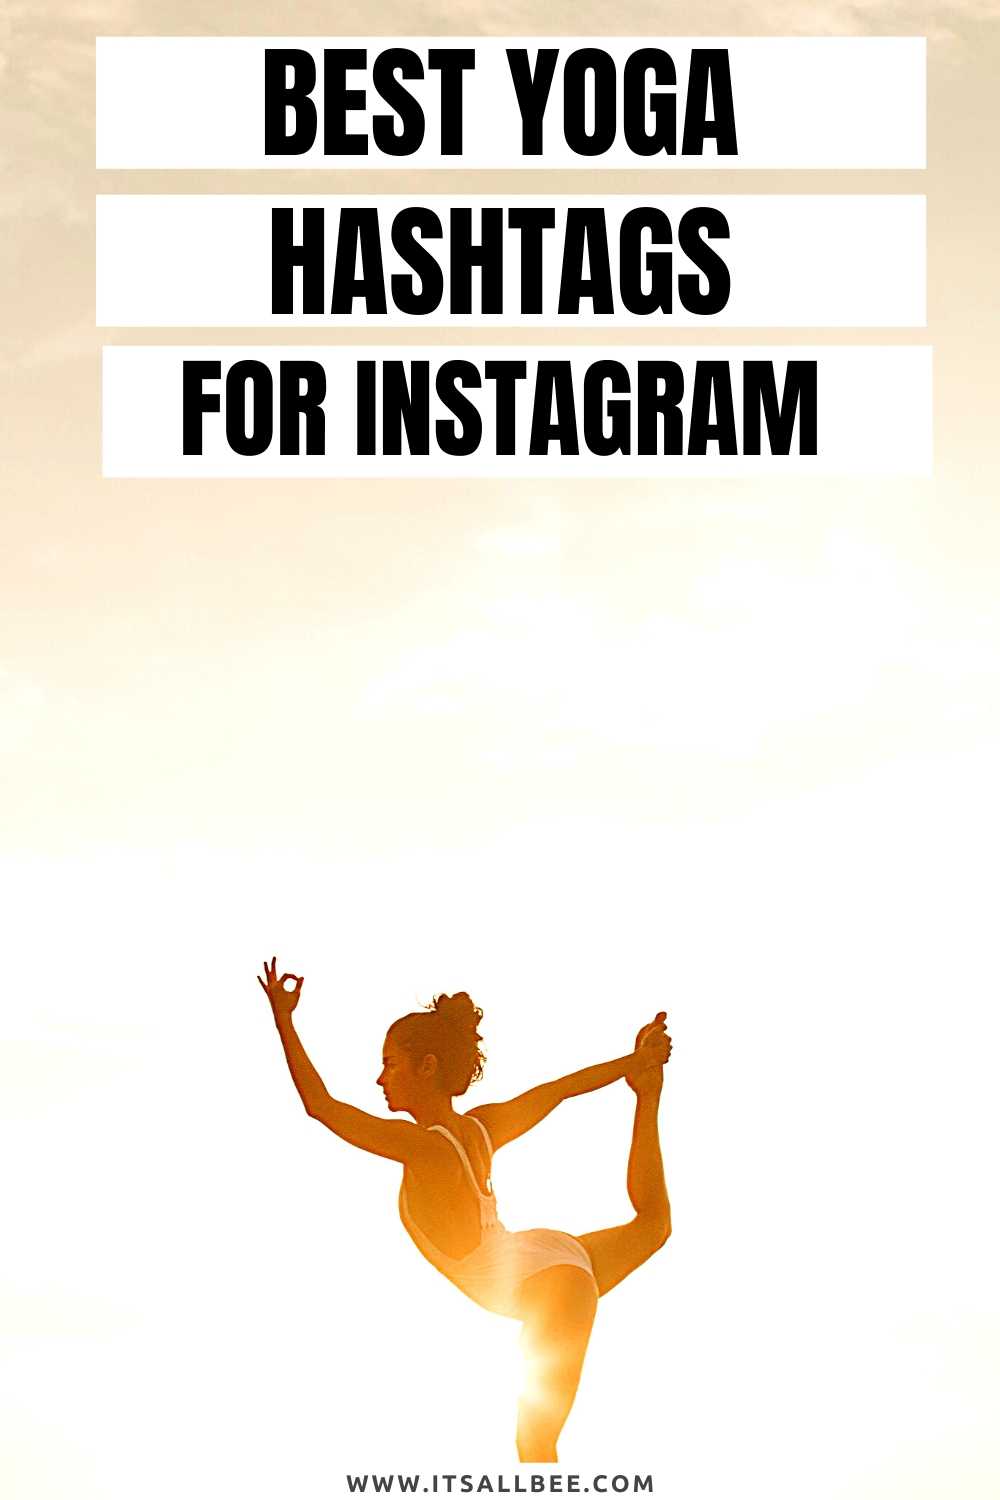 hashtags for yoga